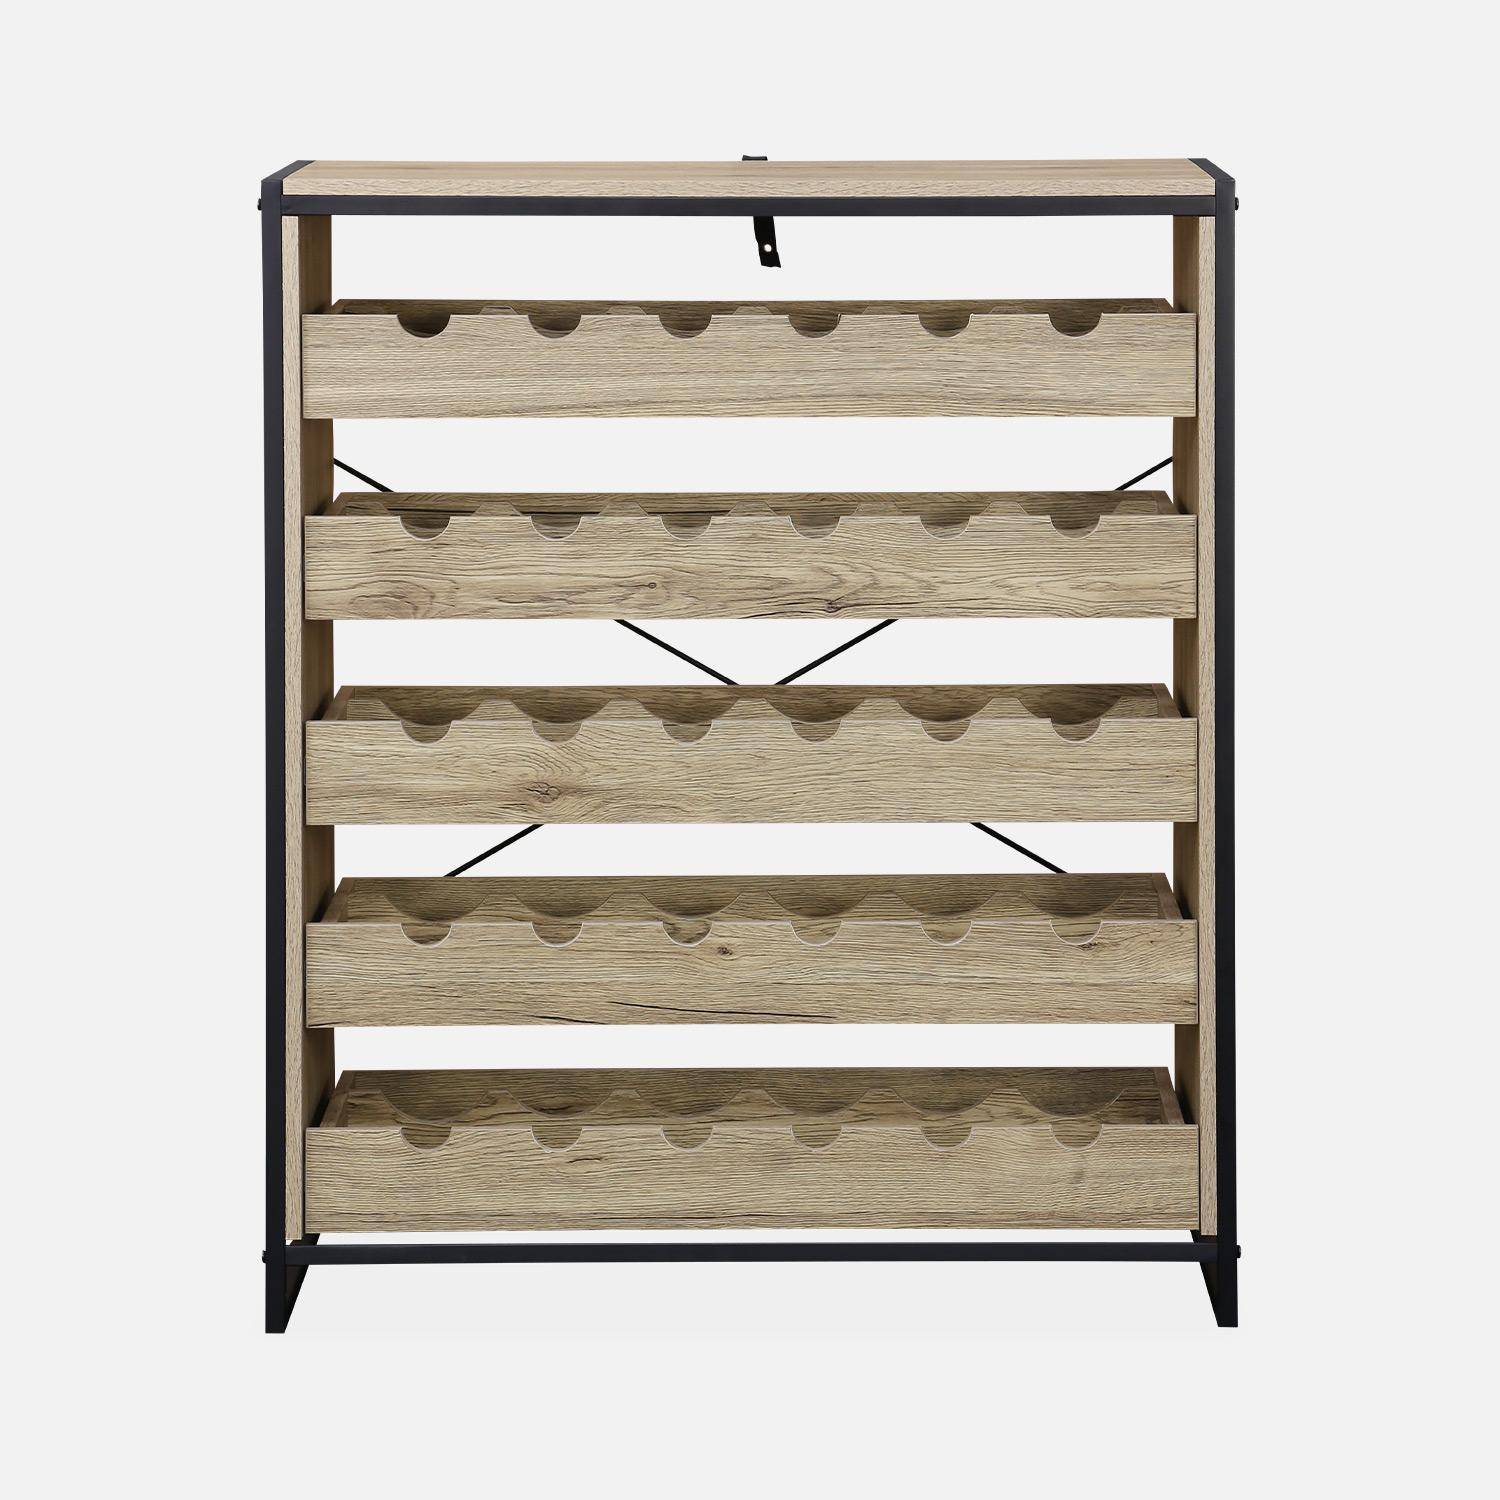 Metal and wood-effect wine rack with 5 shelves, 75x40x90cm - Loft,sweeek,Photo5